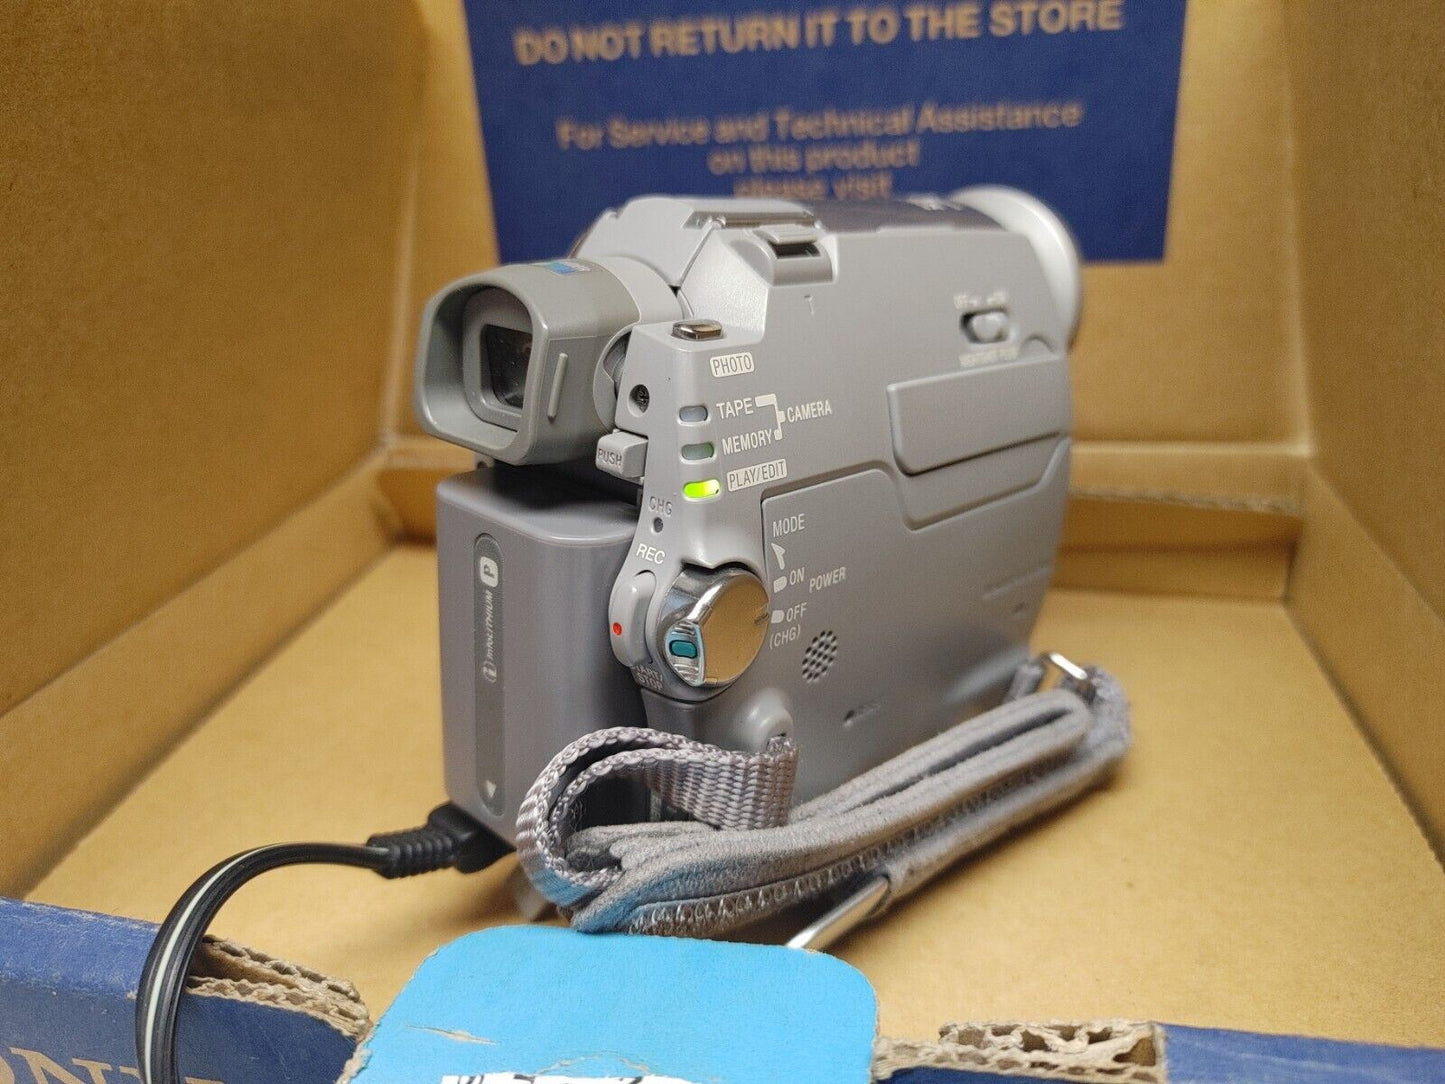 Sony DCR-HC40 Mini DV Handycam Camcorder